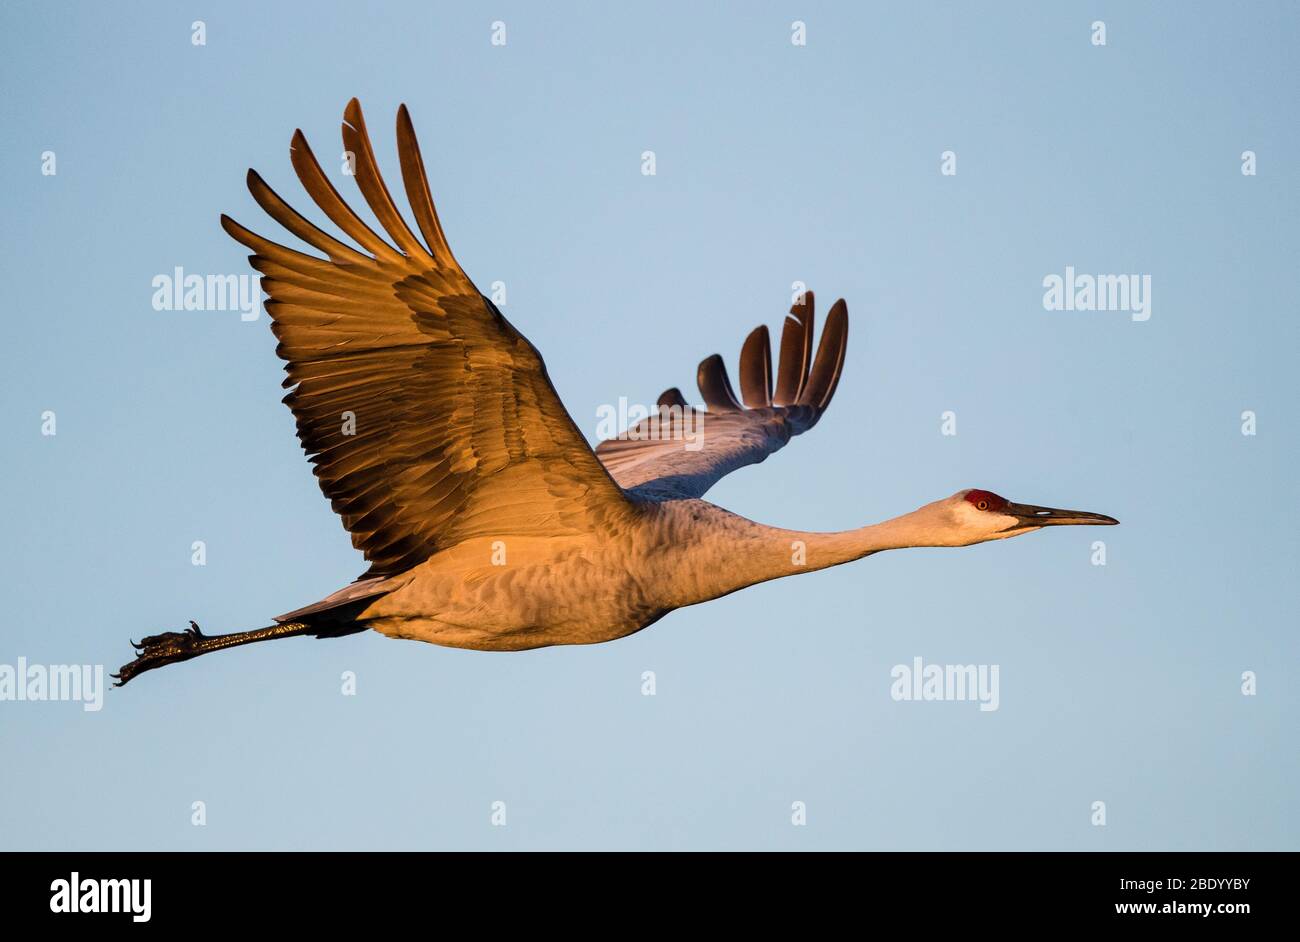 Flying Sandhill crane, Soccoro, New Mexico, USA Stock Photo